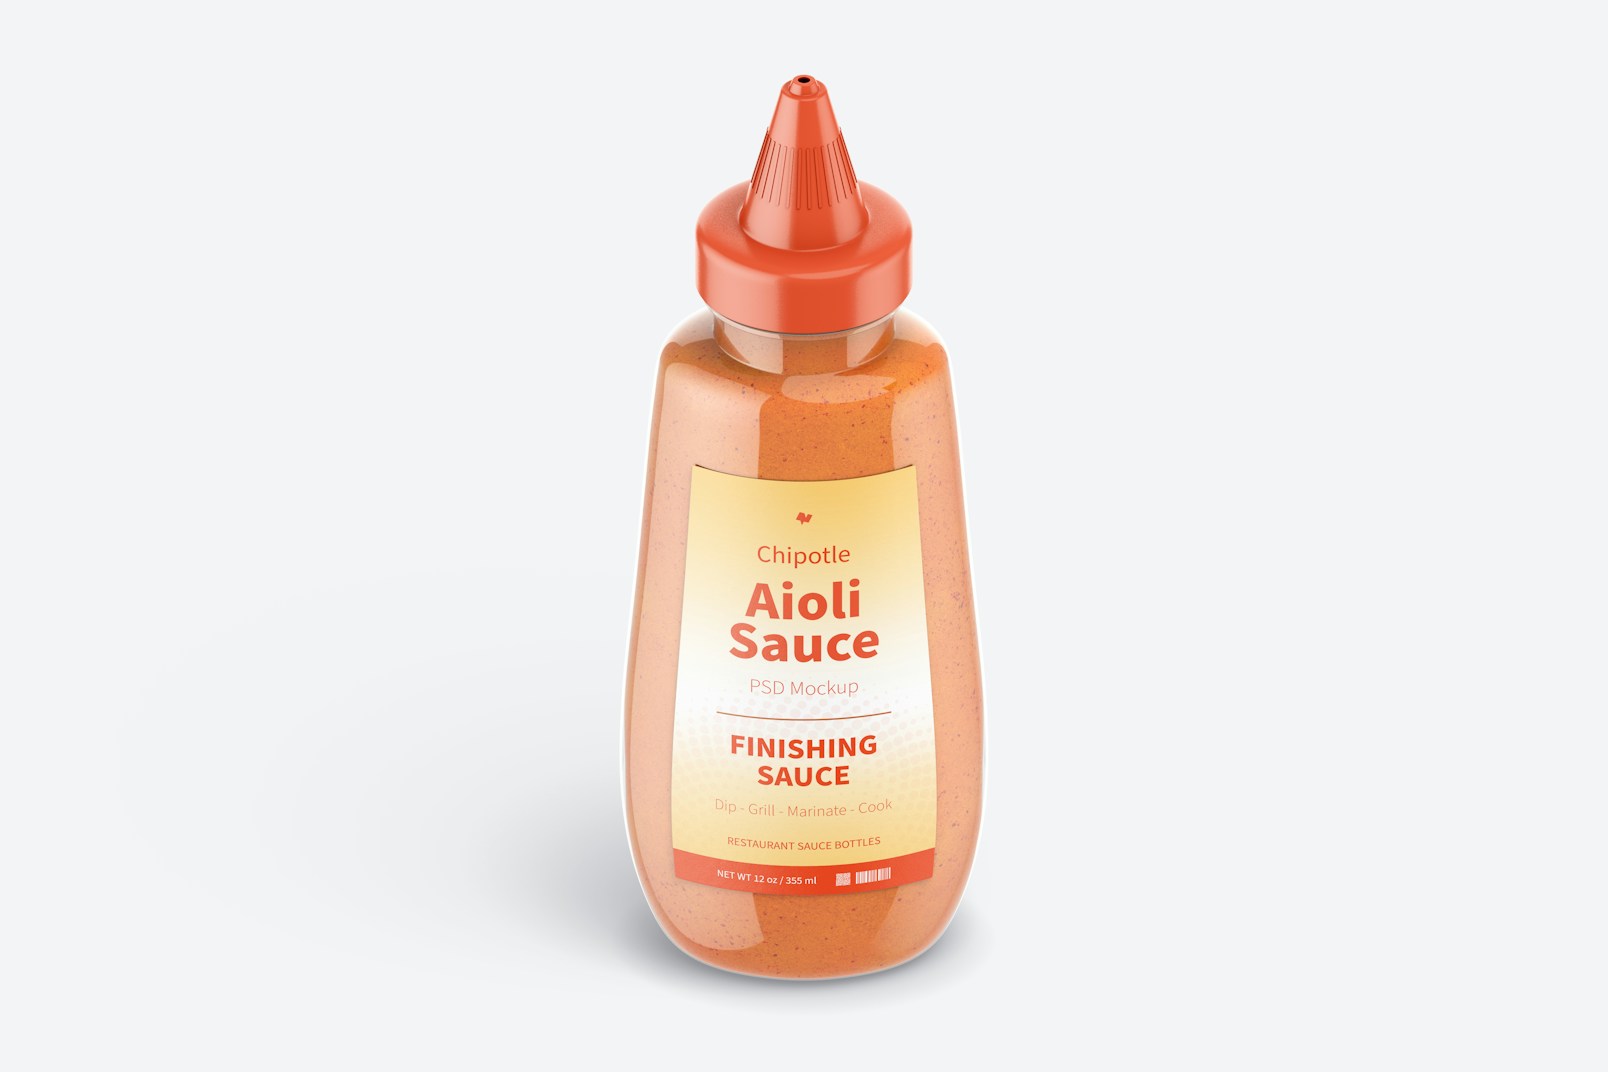 12 oz Chipotle Aioli Sauce Bottle Mockup, Isometric View